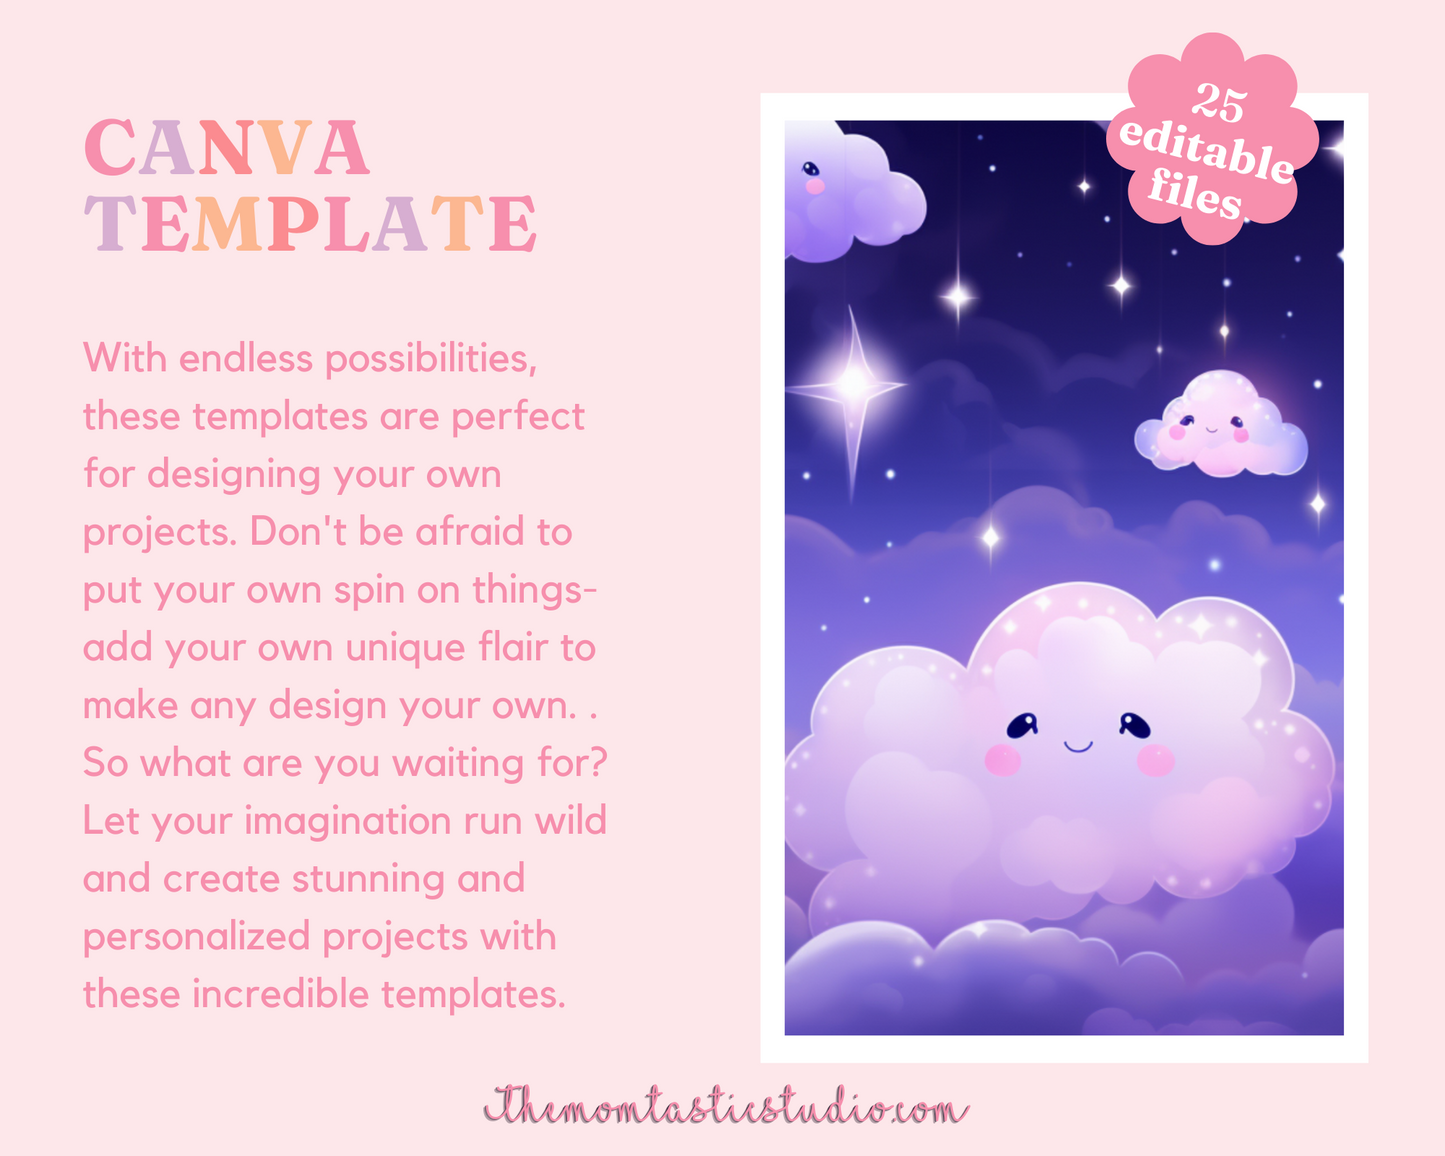 2024 Template | Lilac Dreams Calendar Printable | Canva Editable | Commercial Use